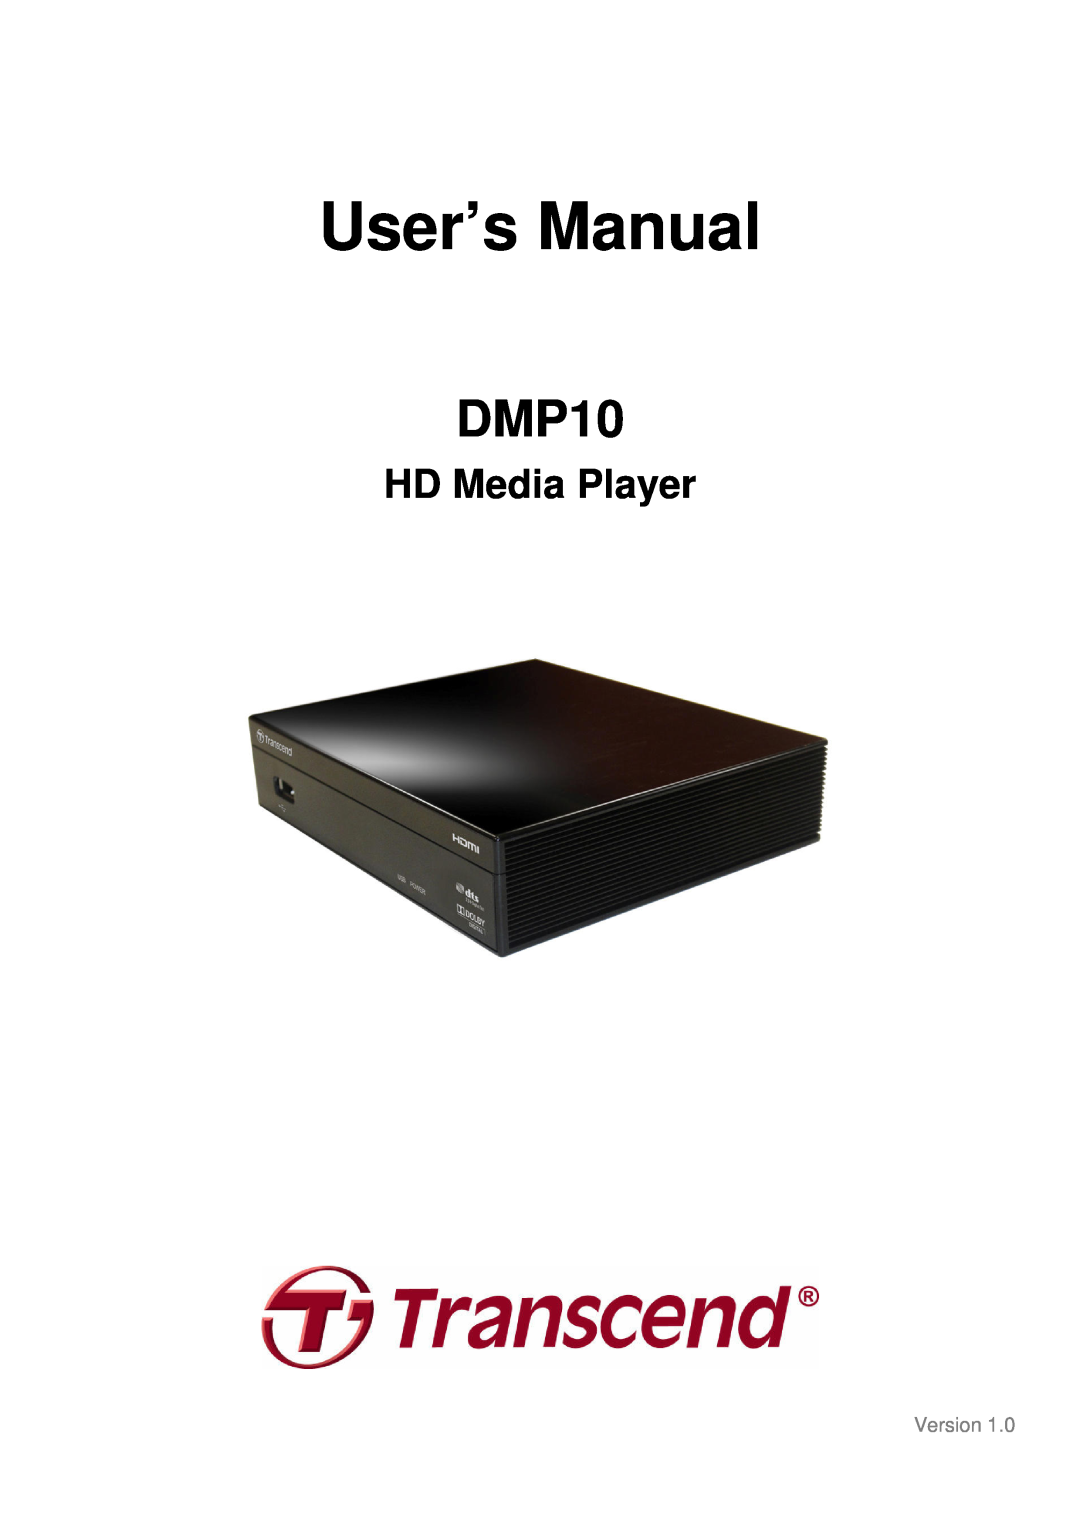 Transcend Information DMP10 user manual User’s Manual, HD Media Player, Version 